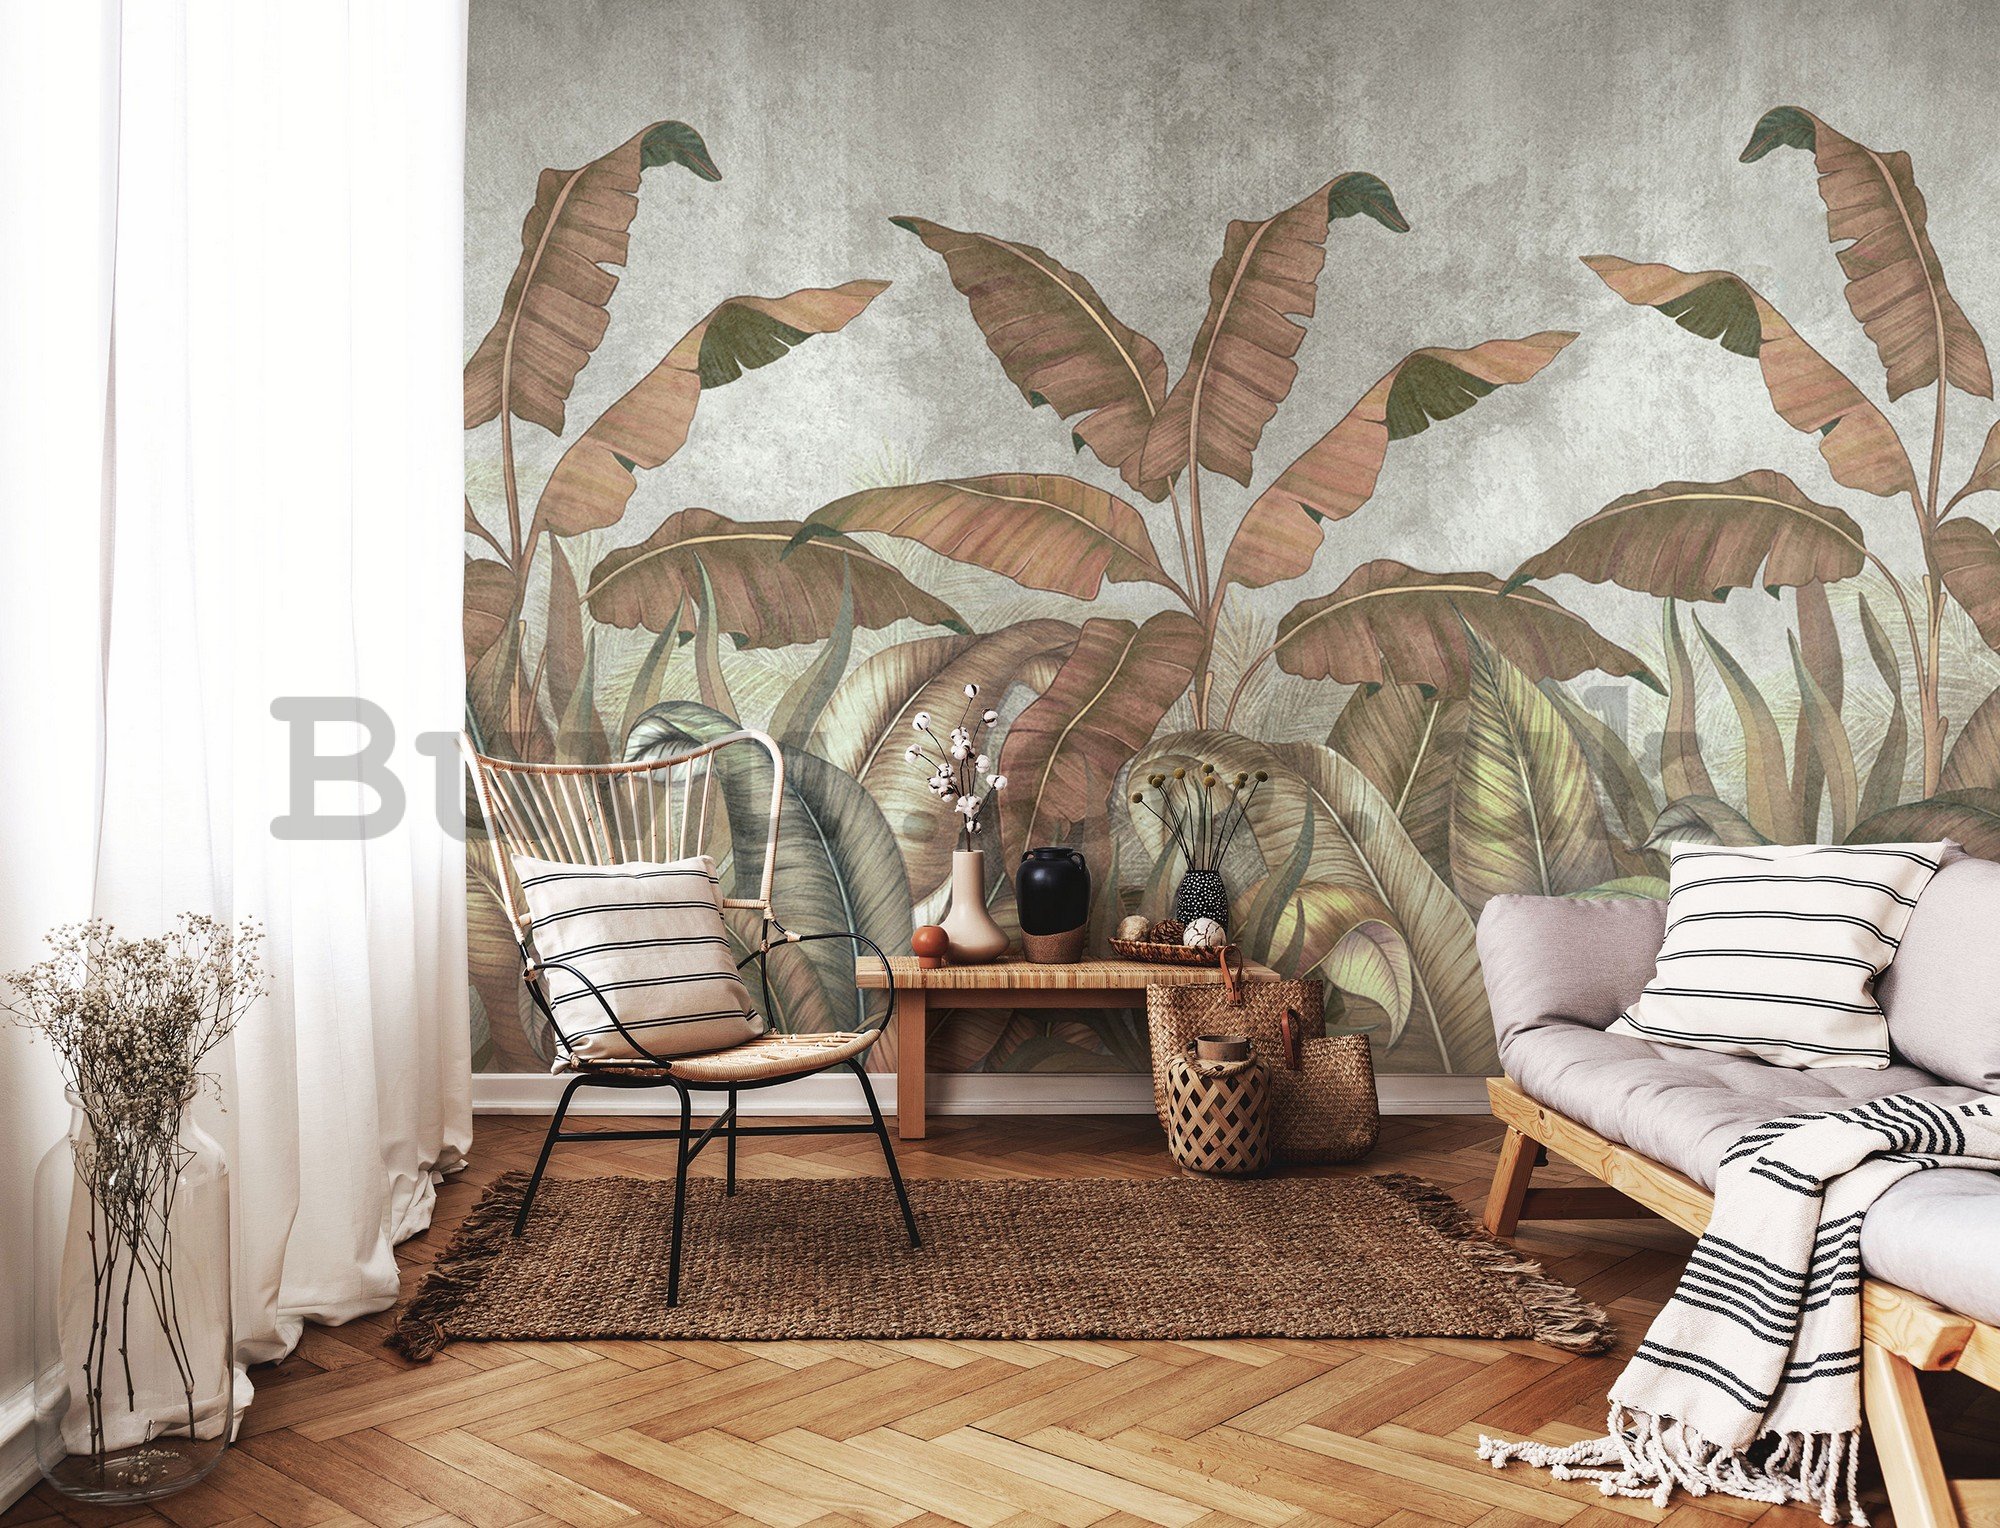 Wall mural vlies: Imitation of natural leaves - 254x184 cm